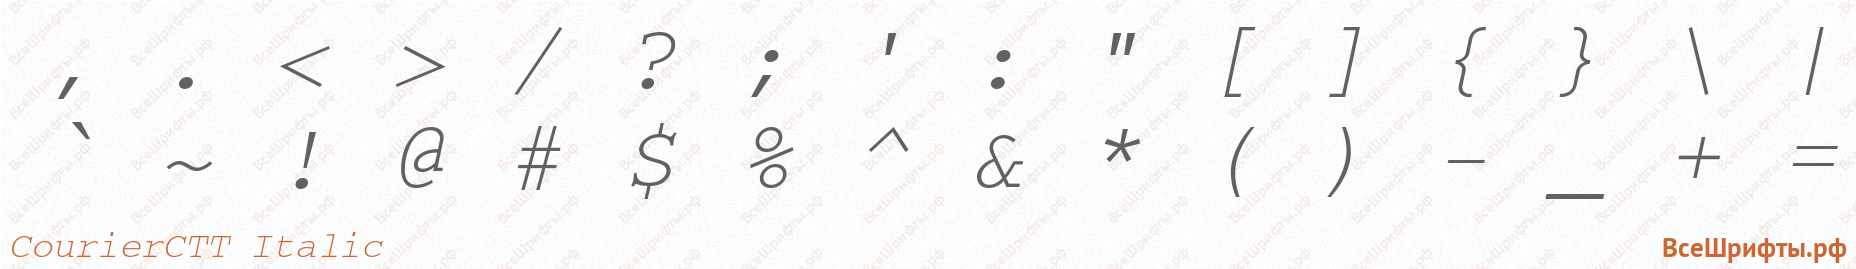 Шрифт CourierCTT Italic со знаками препинания и пунктуации